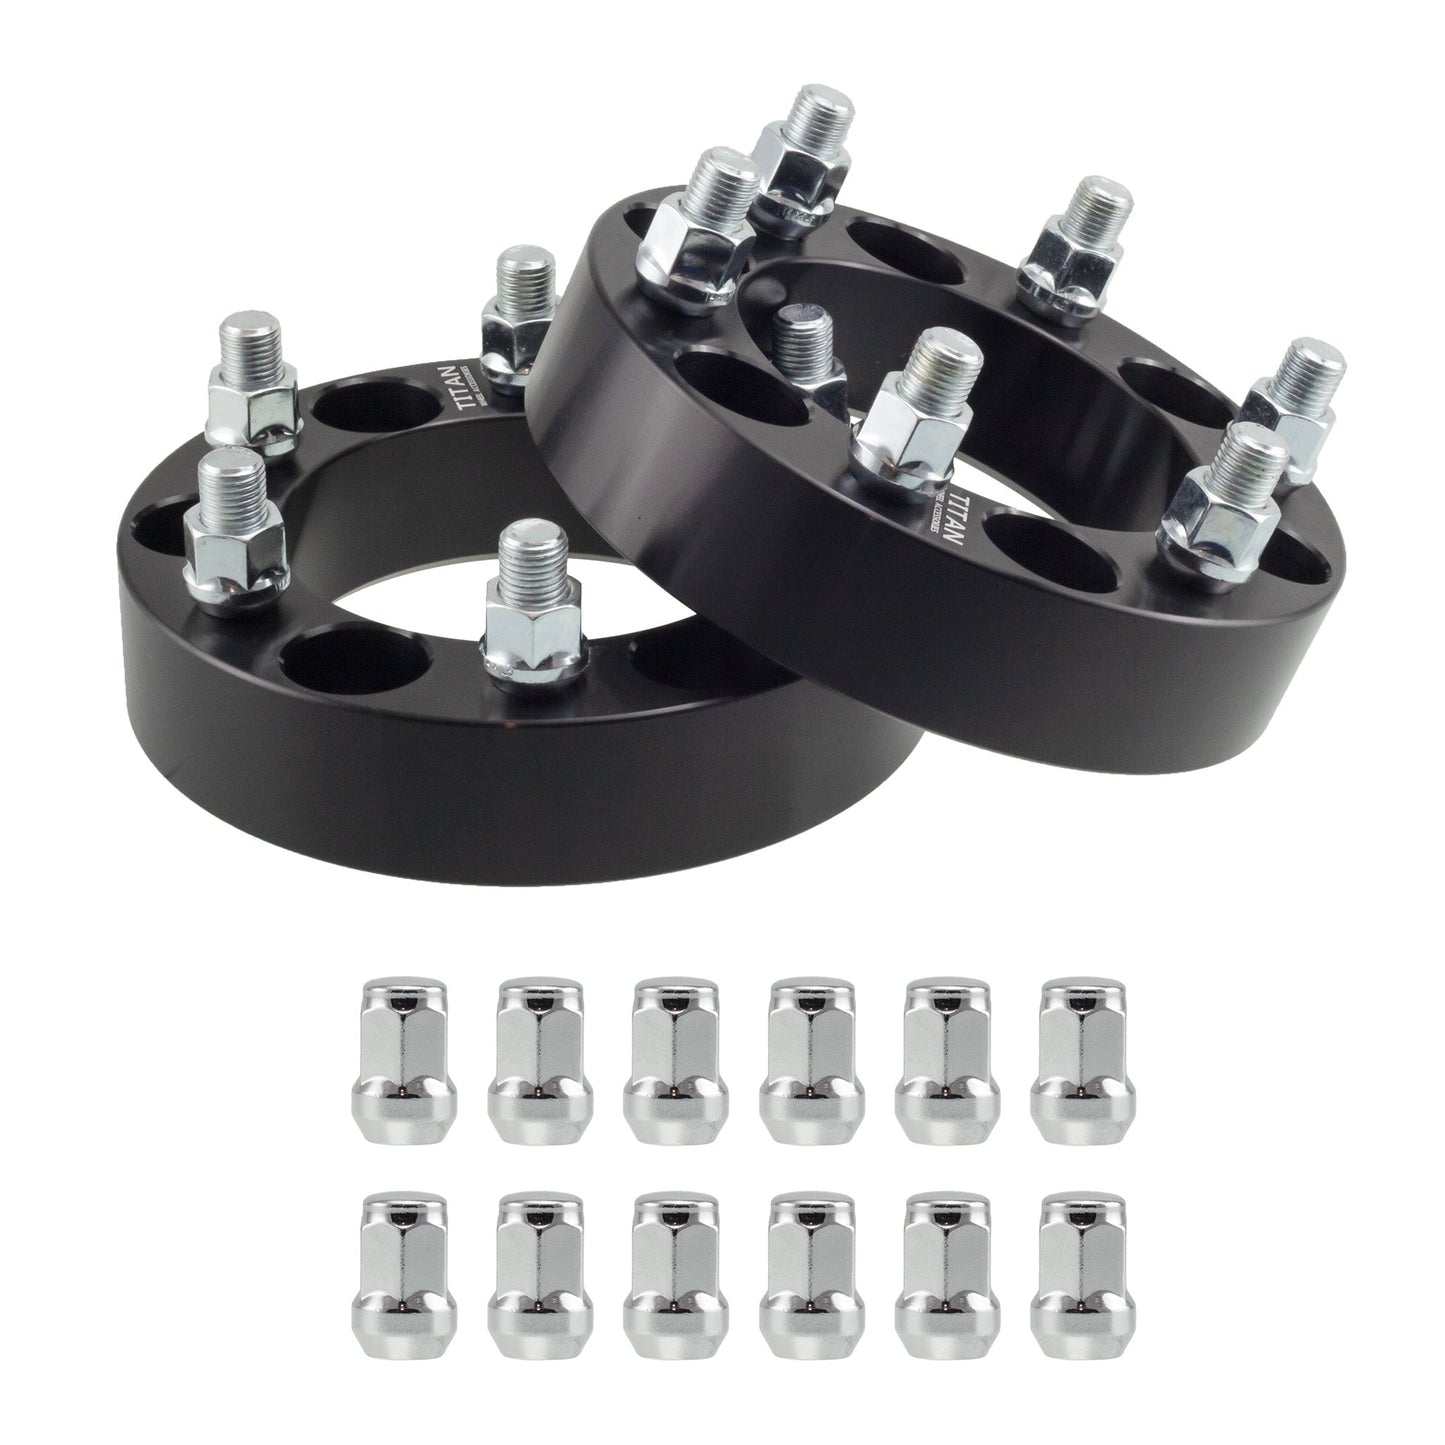 2" (50mm) Titan Wheel Spacers for Chevy Silverado GMC Sierra 1500 | 6x5.5 (6x139.7 | 14x1.5 Studs | Titan Wheel Accessories